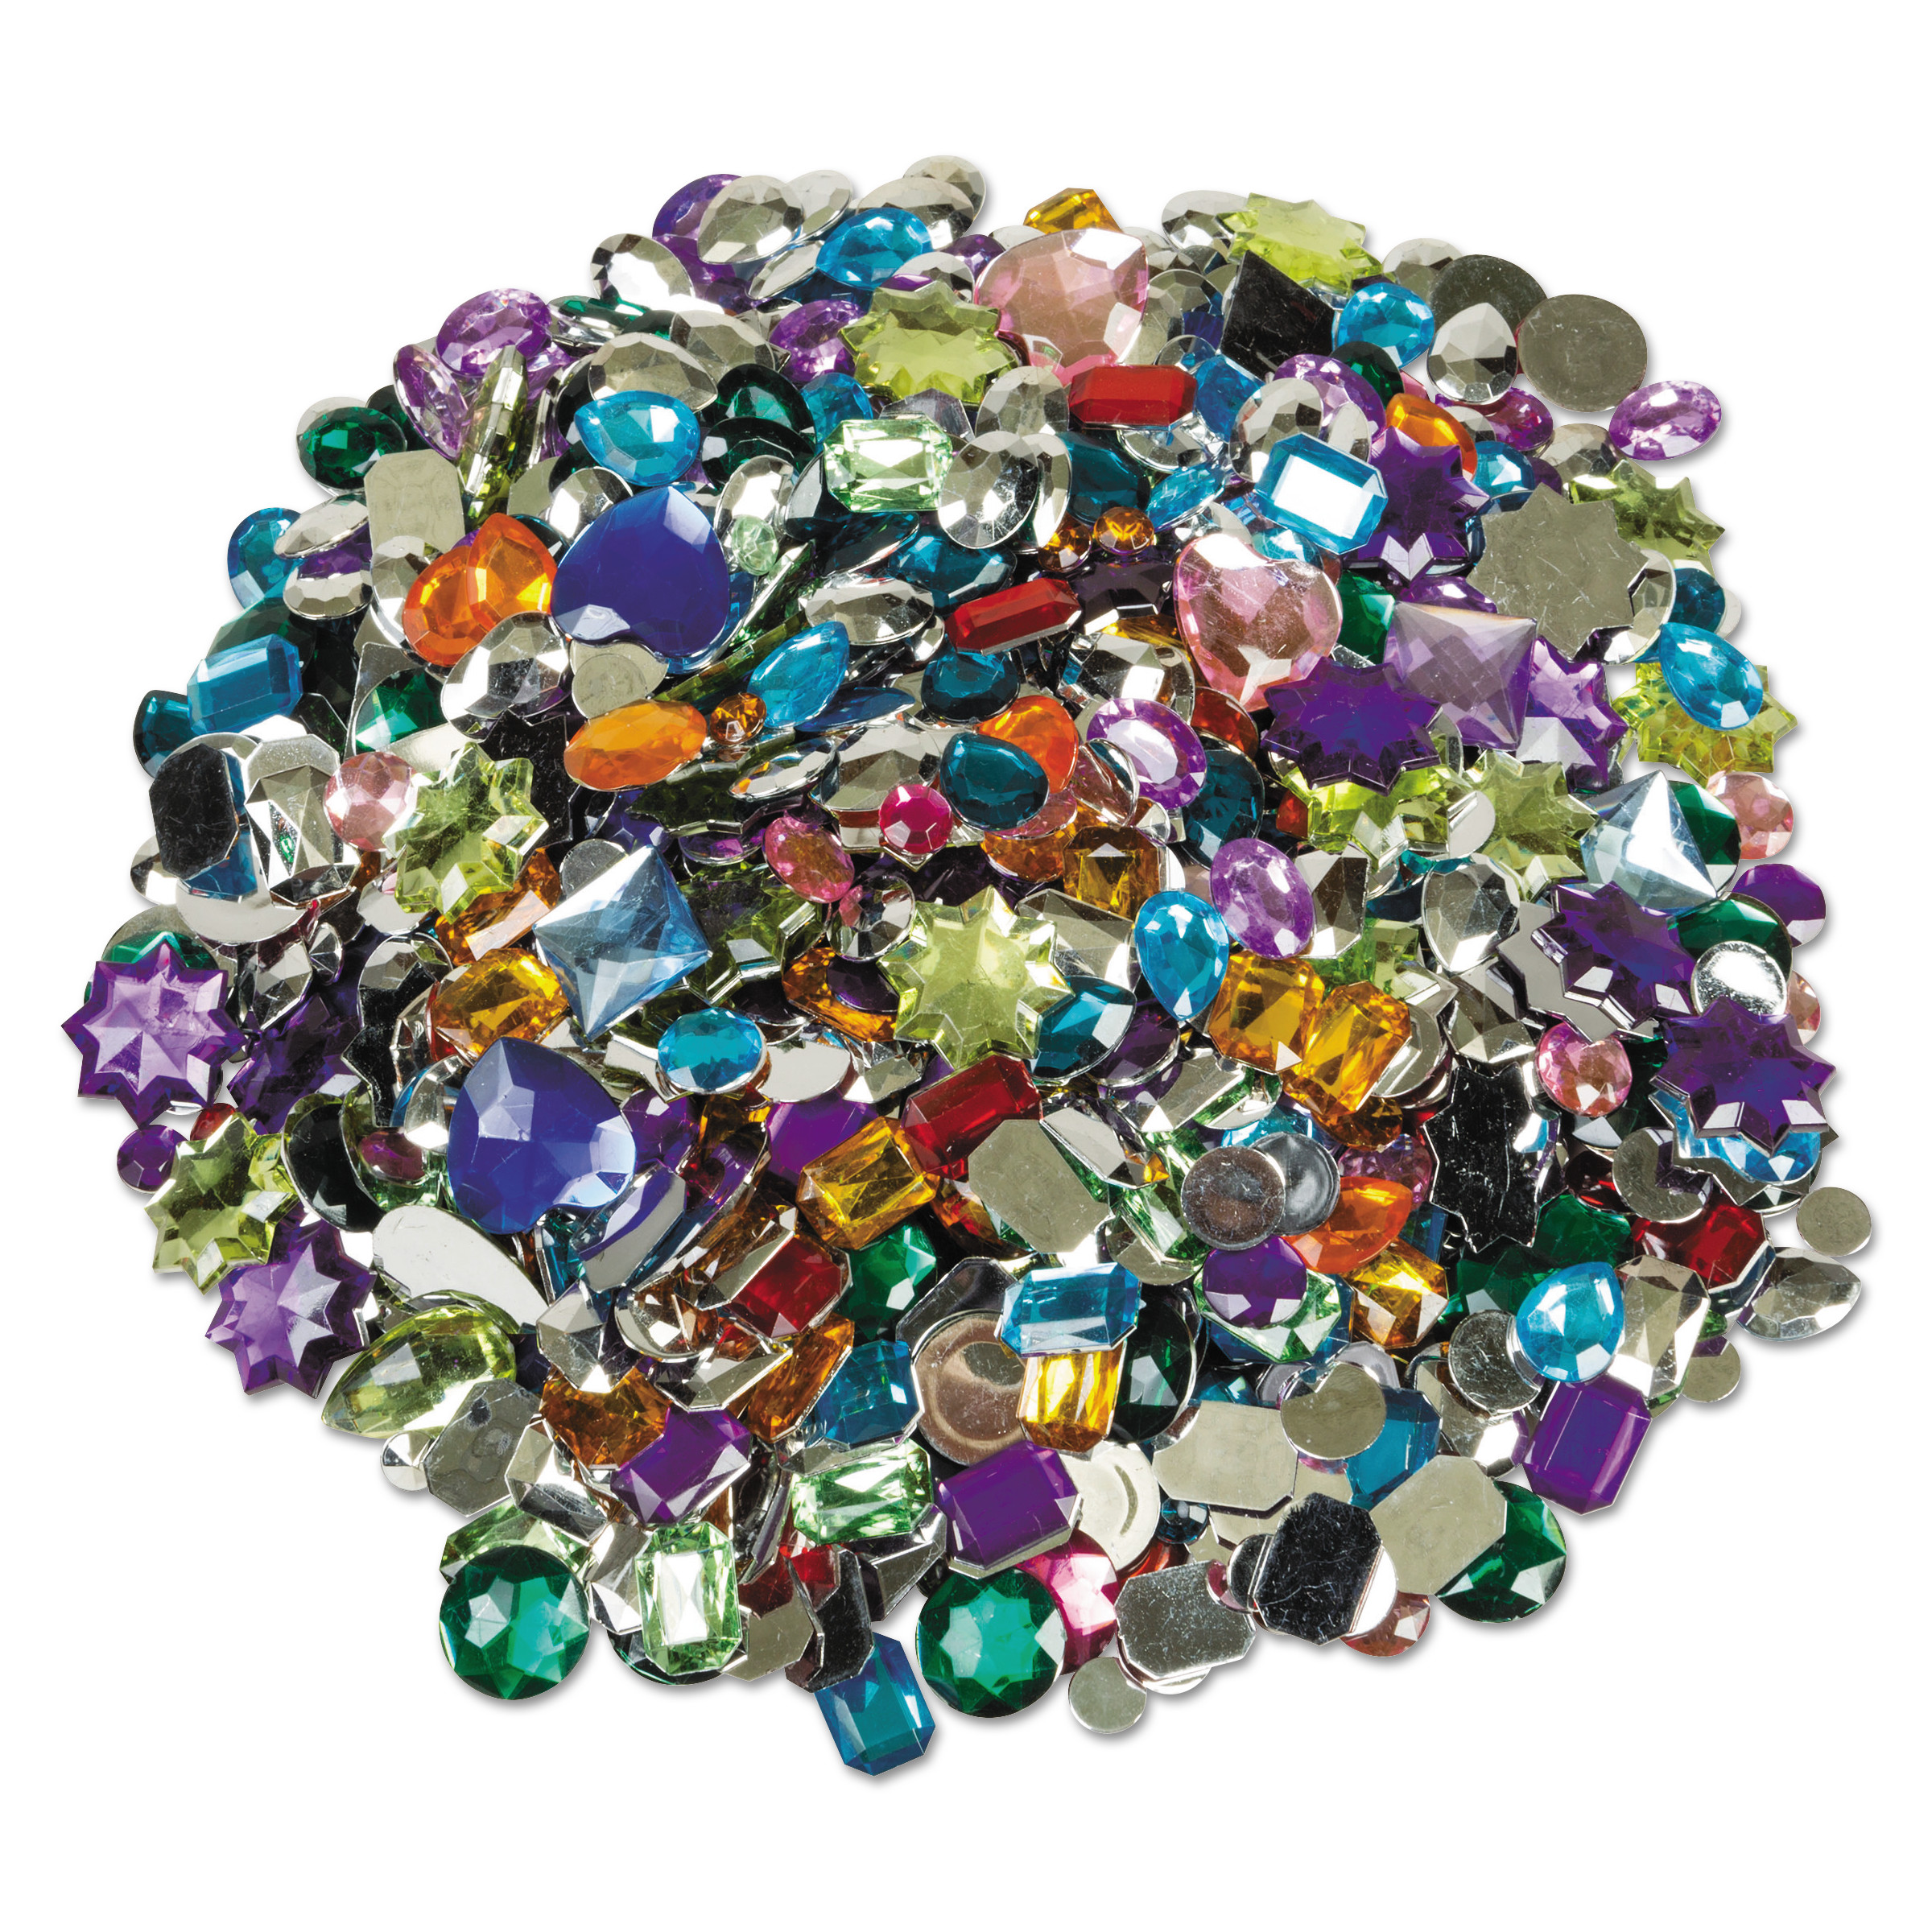  Creativity Street 3584 Acrylic Gemstones Classroom Pack, 1 lb, Assorted Colors/Sizes (CKC3584) 